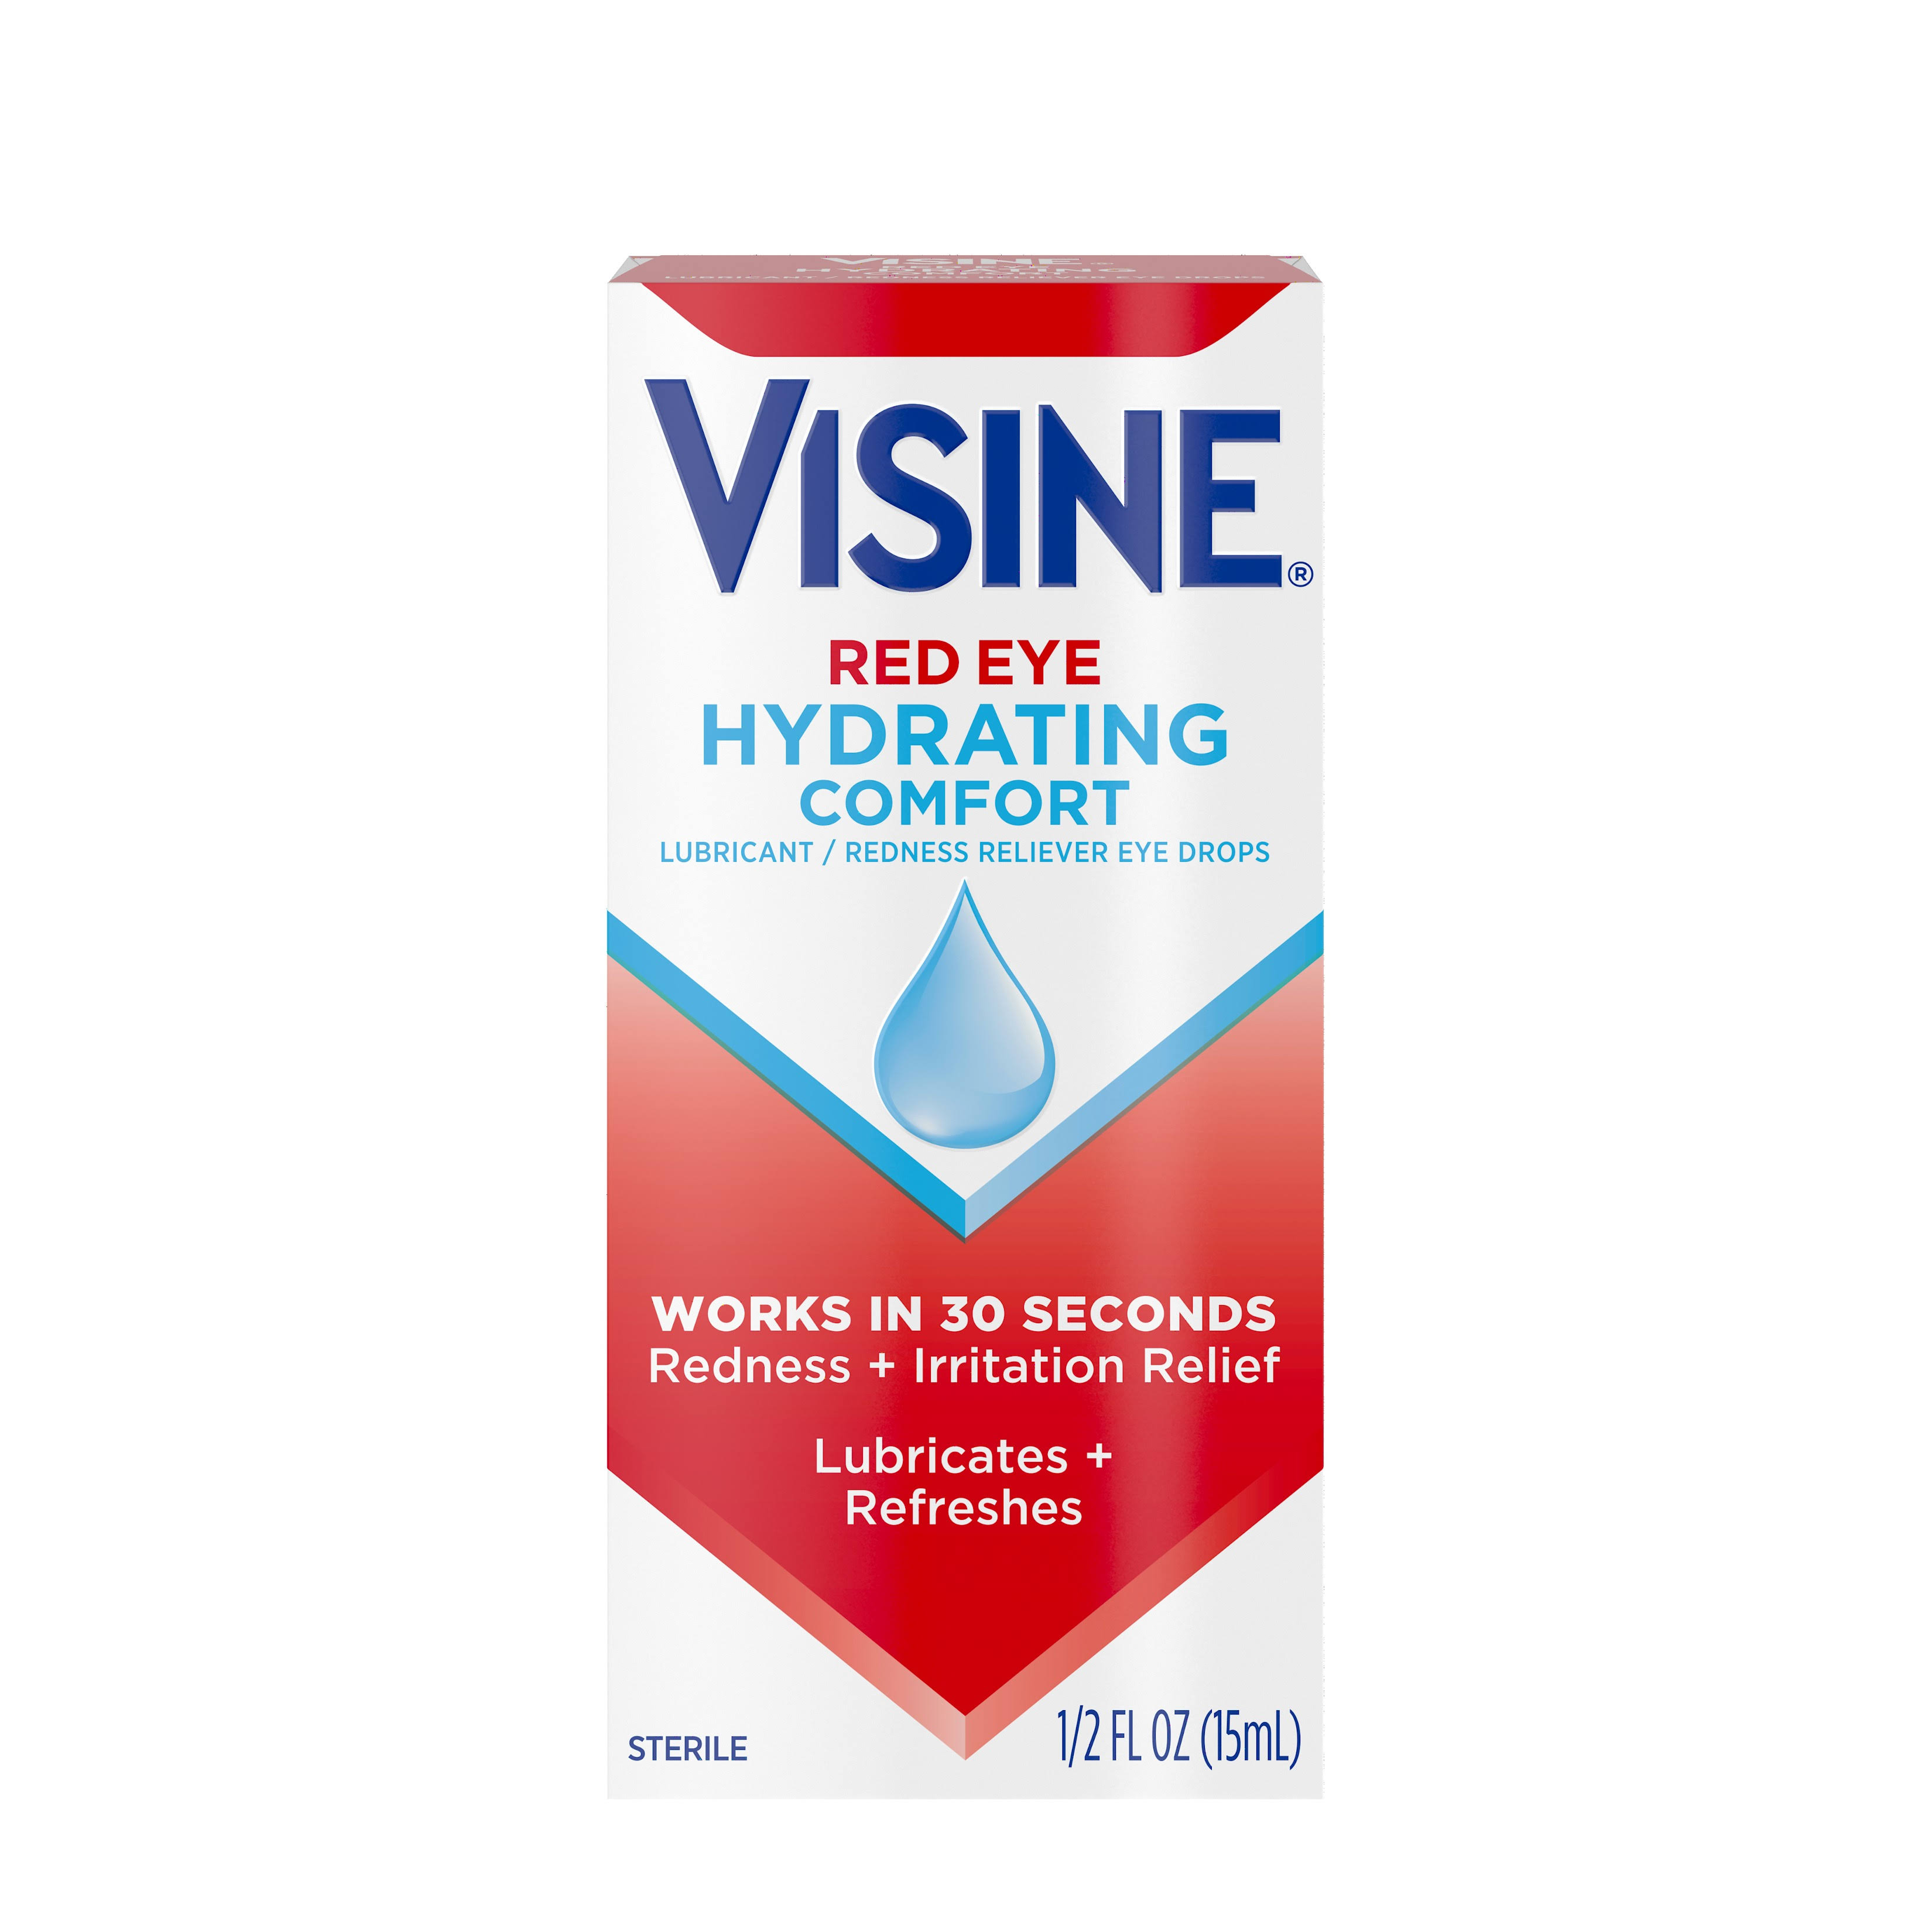 Visine Eye Drops, Red Eye, Hydrating Comfort, Sterile - 0.5 fl oz